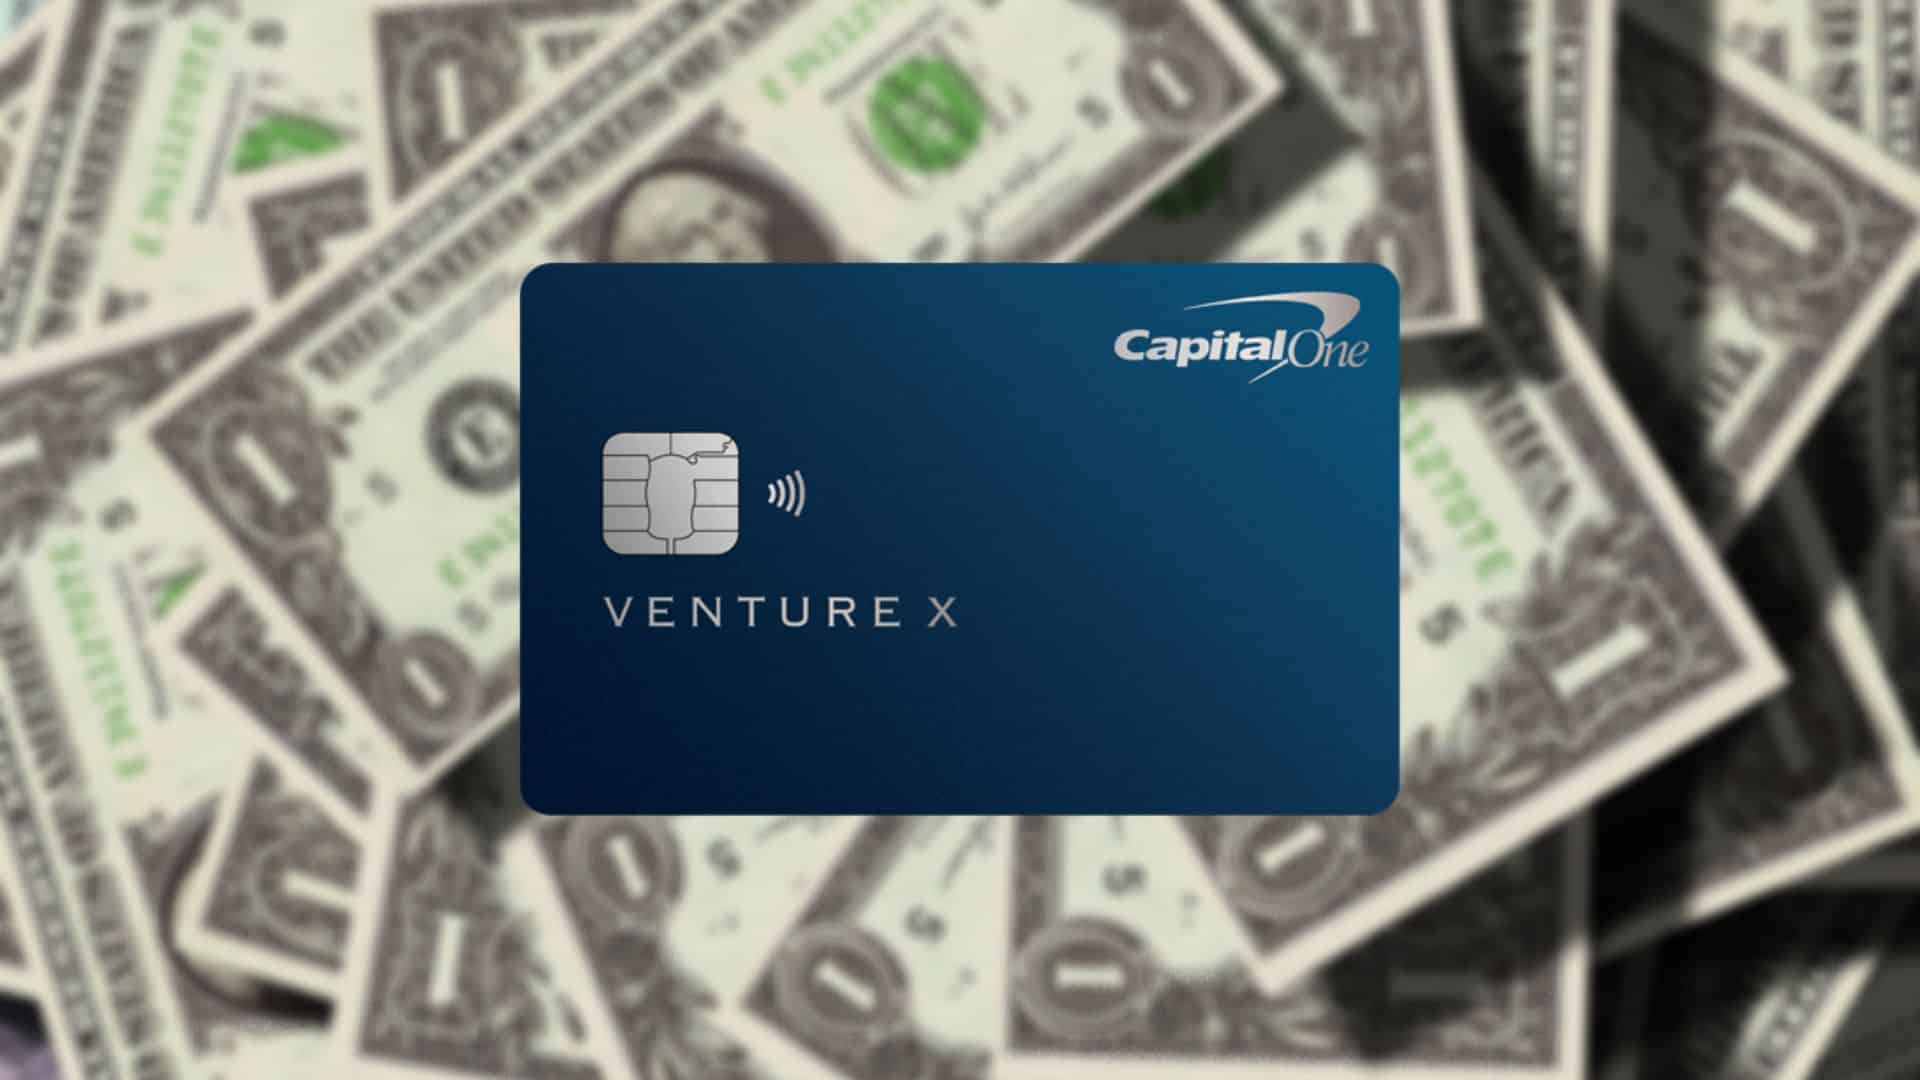 Capital One Venture X $395 Annual Fee